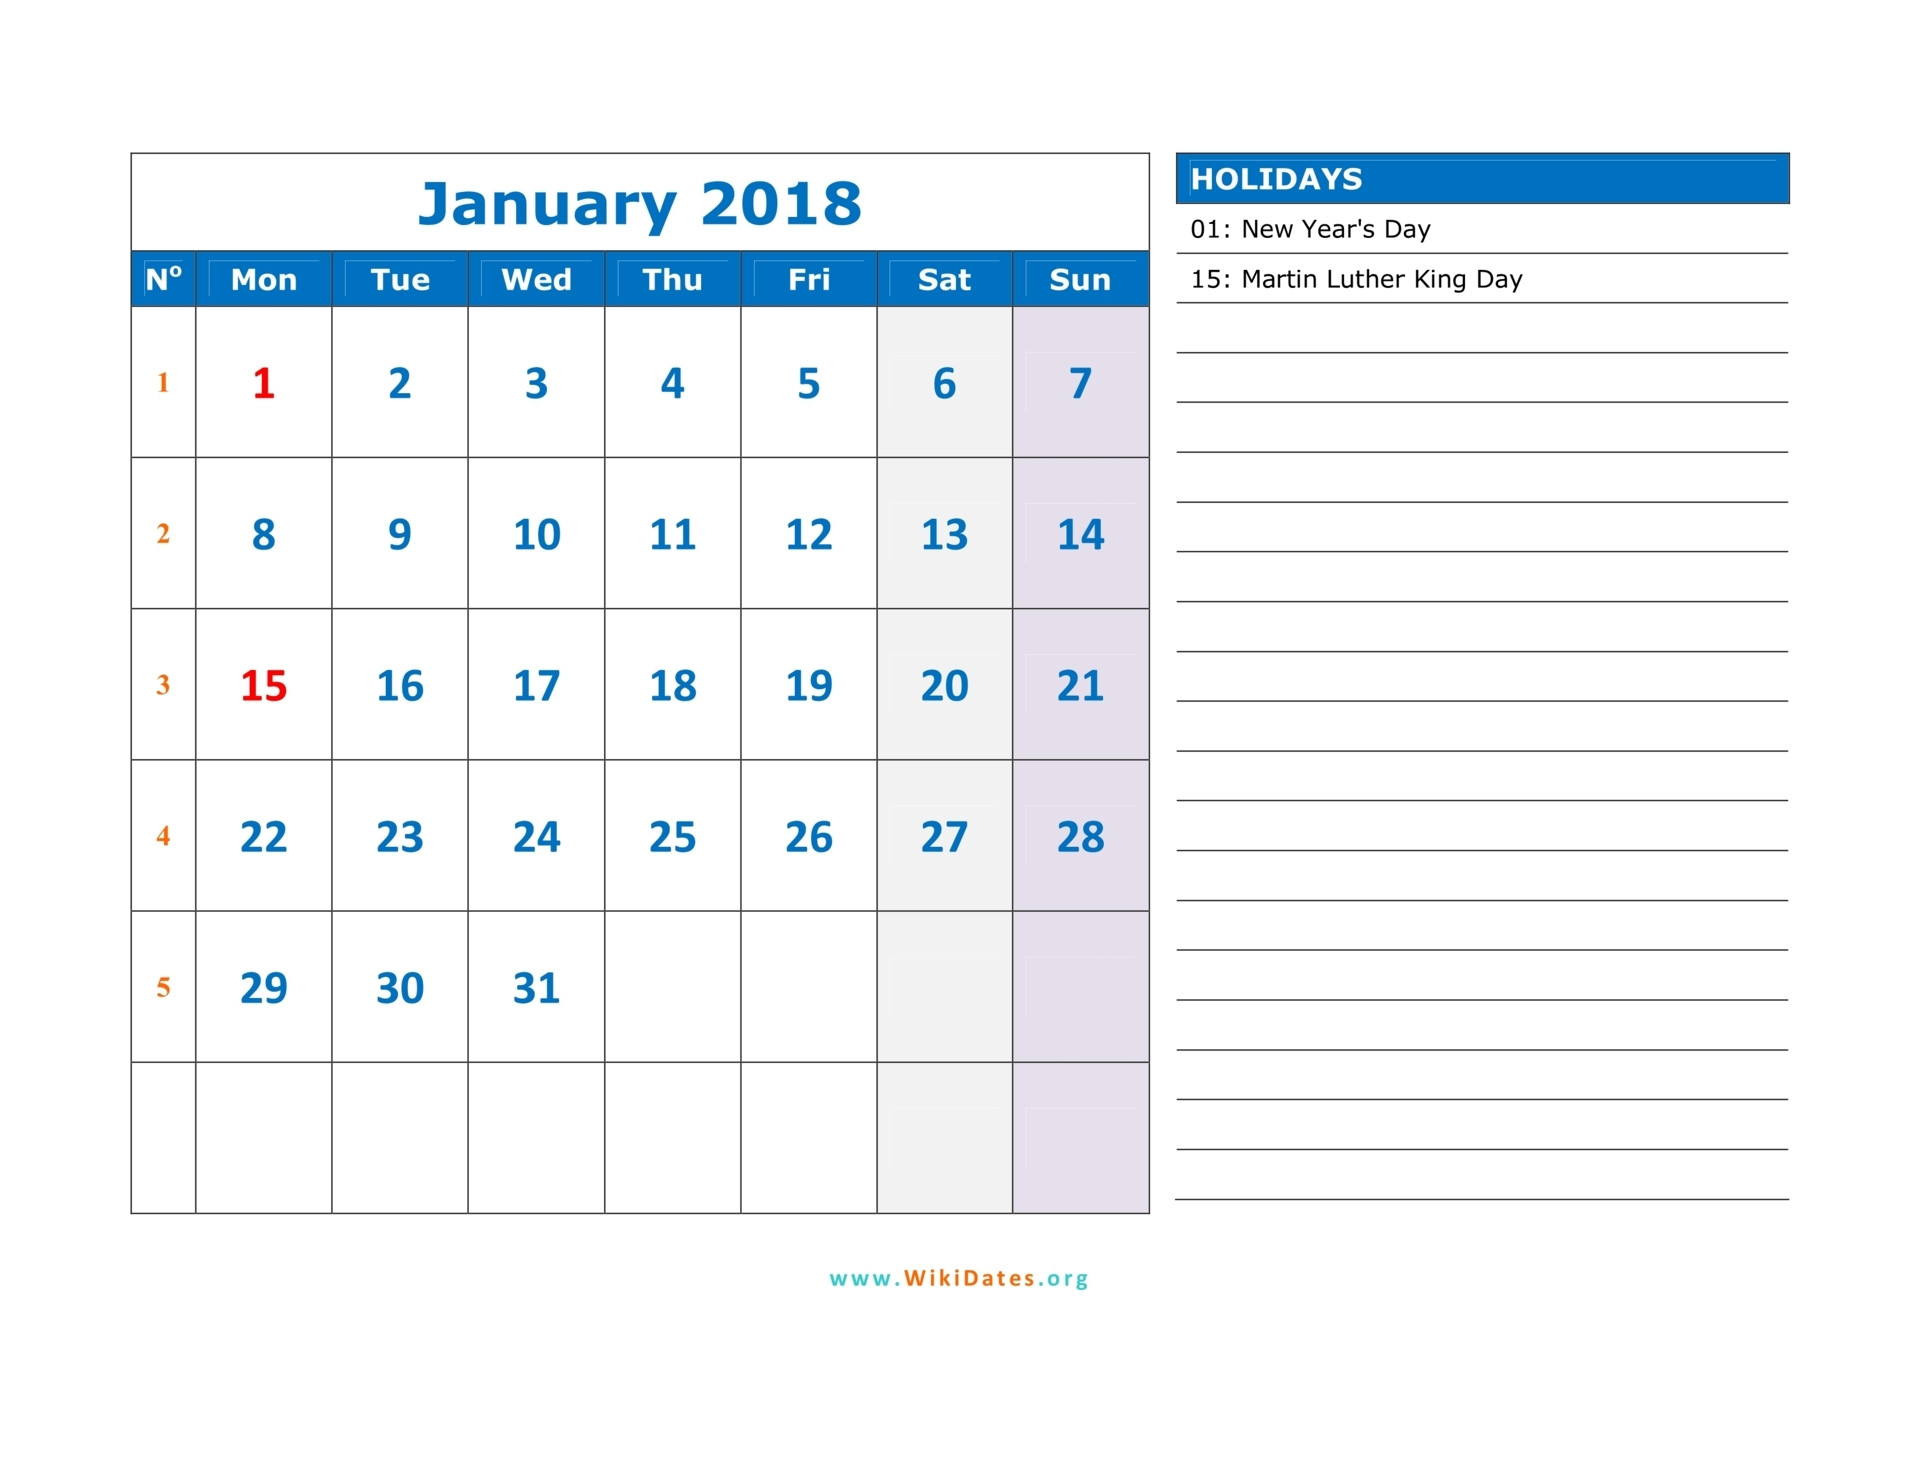 January 2018 Calendar | Wikidates  12 Month Financial Year Calendar 18 To 19